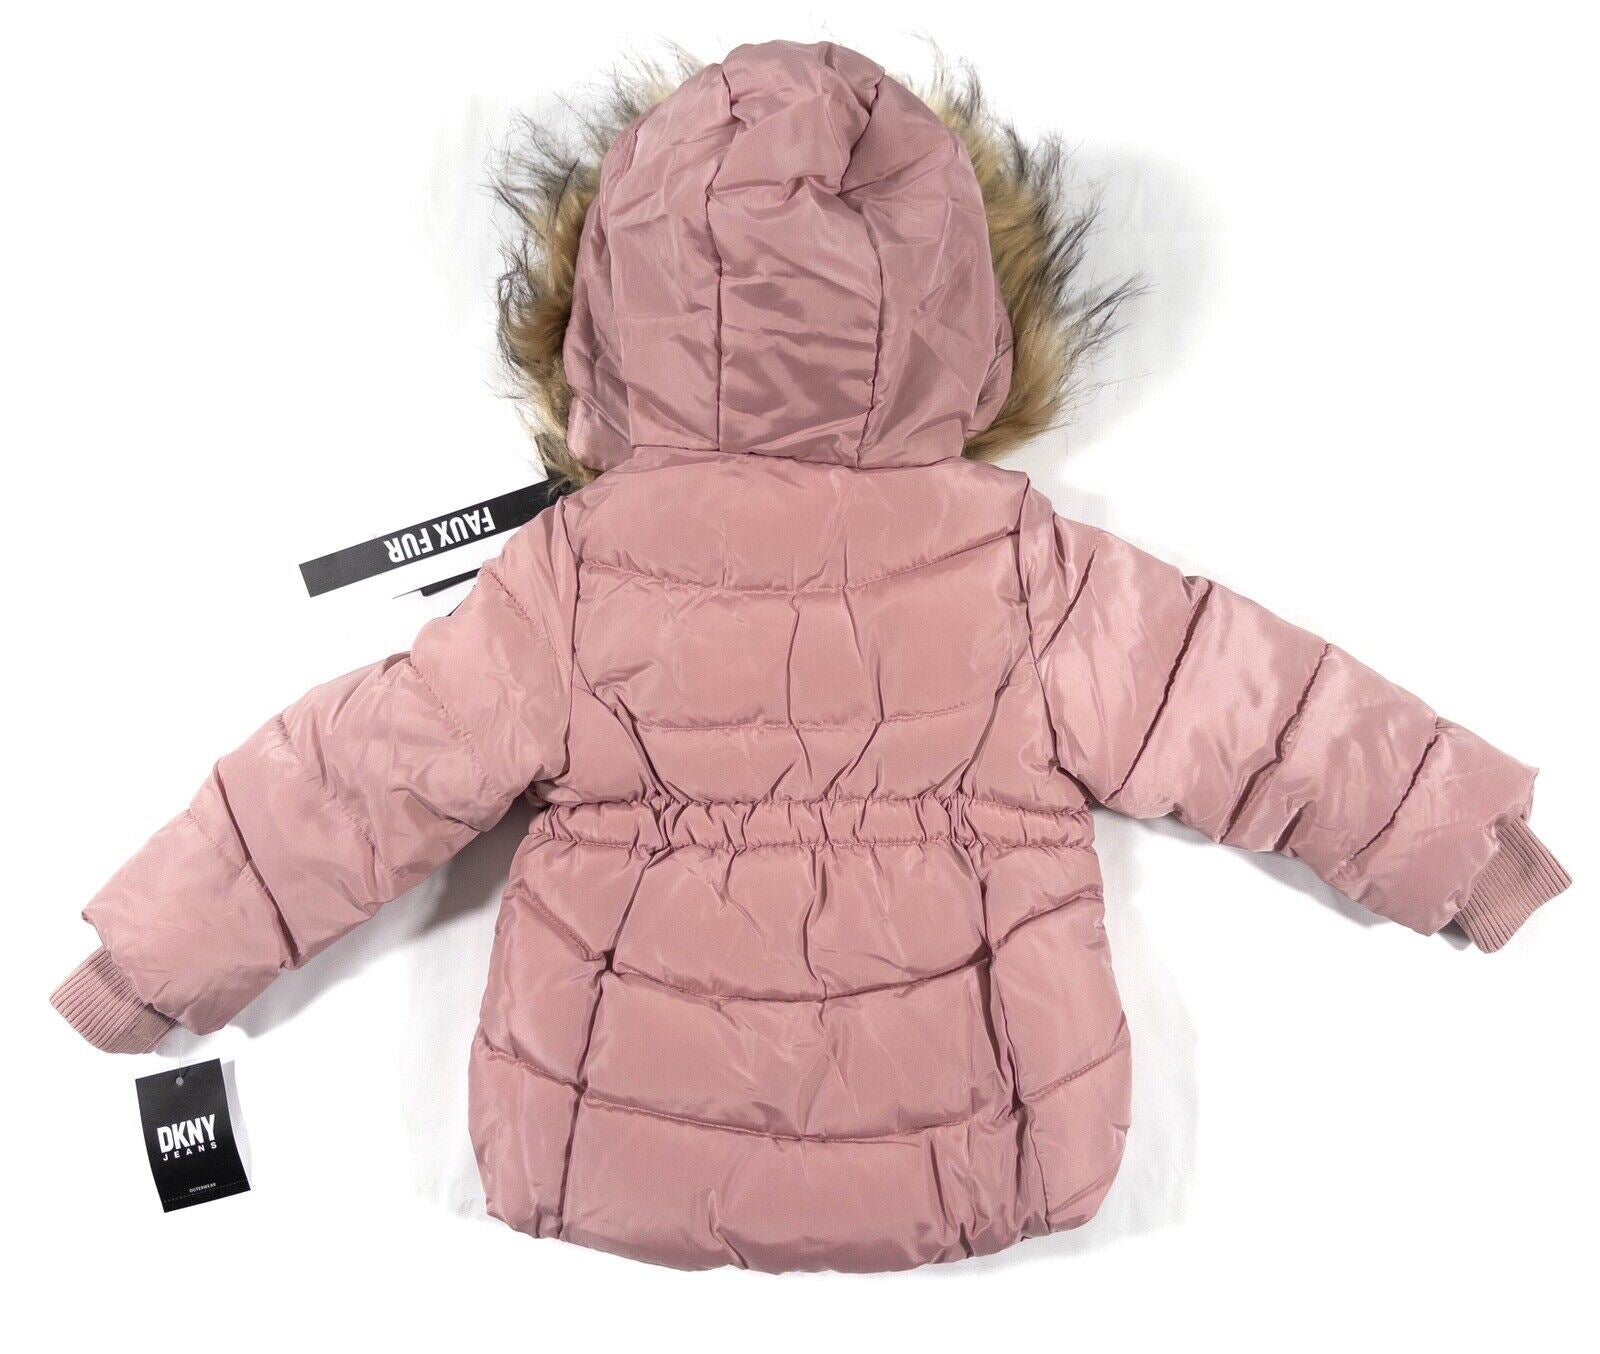 DKNY JEANS Infants Girls Pink Hooded Coat Size UK 12 Months